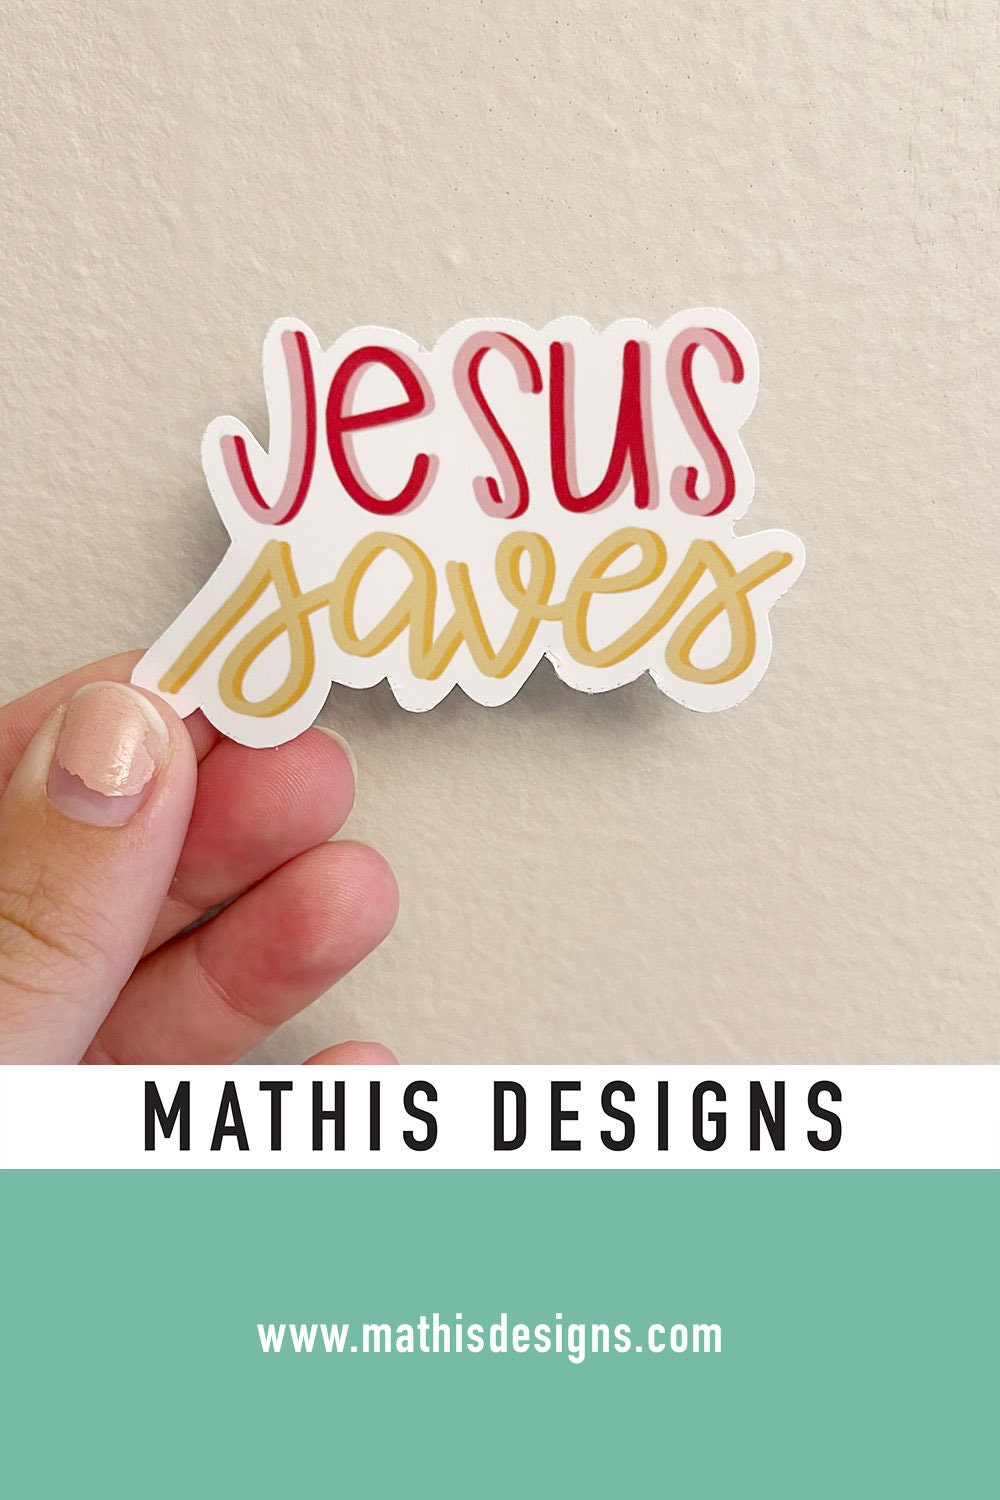 Jesus Saves Sticker